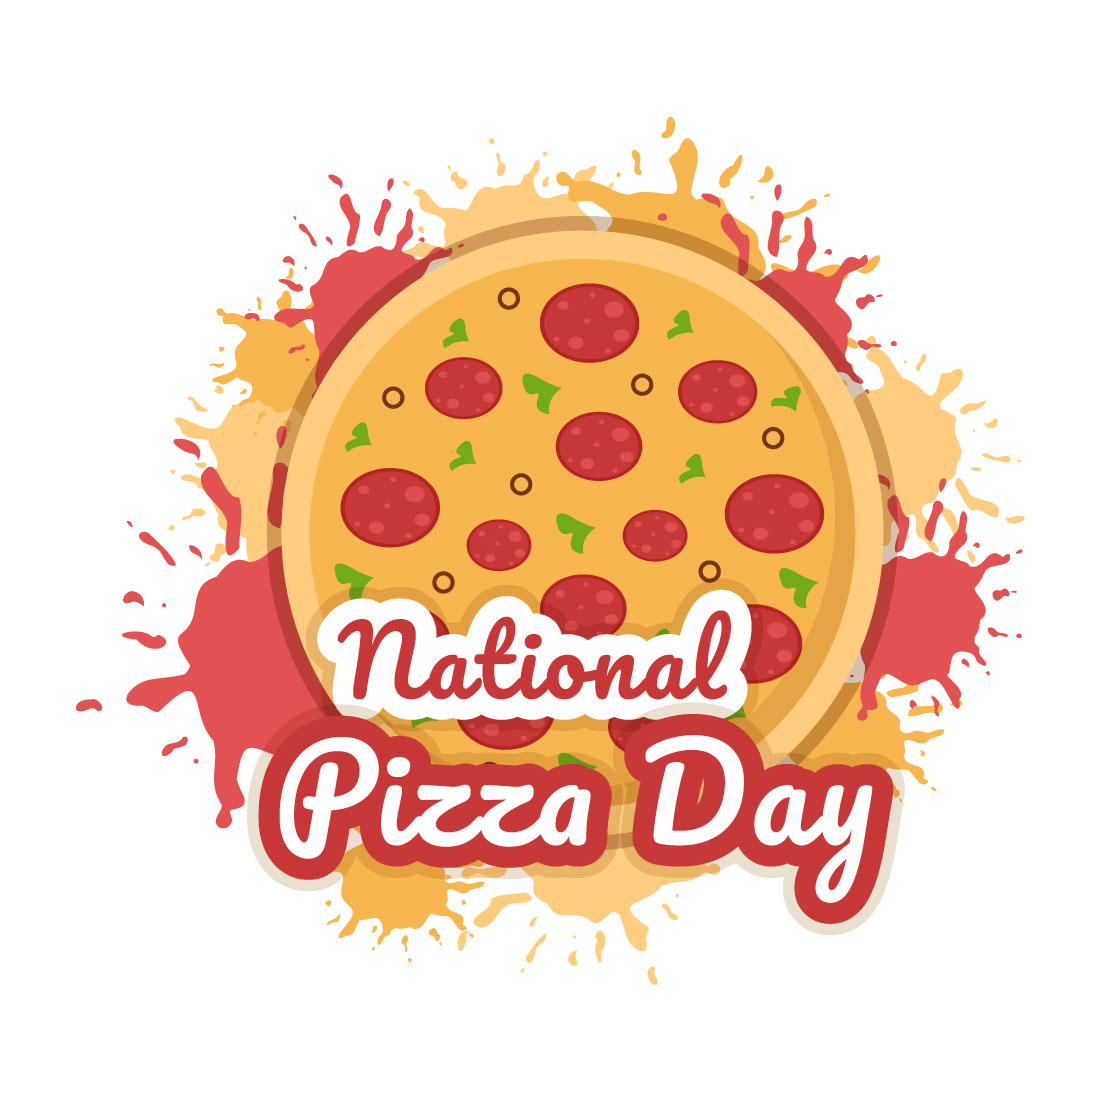 Cartoon Pizza Day Design Graphhics cover image.